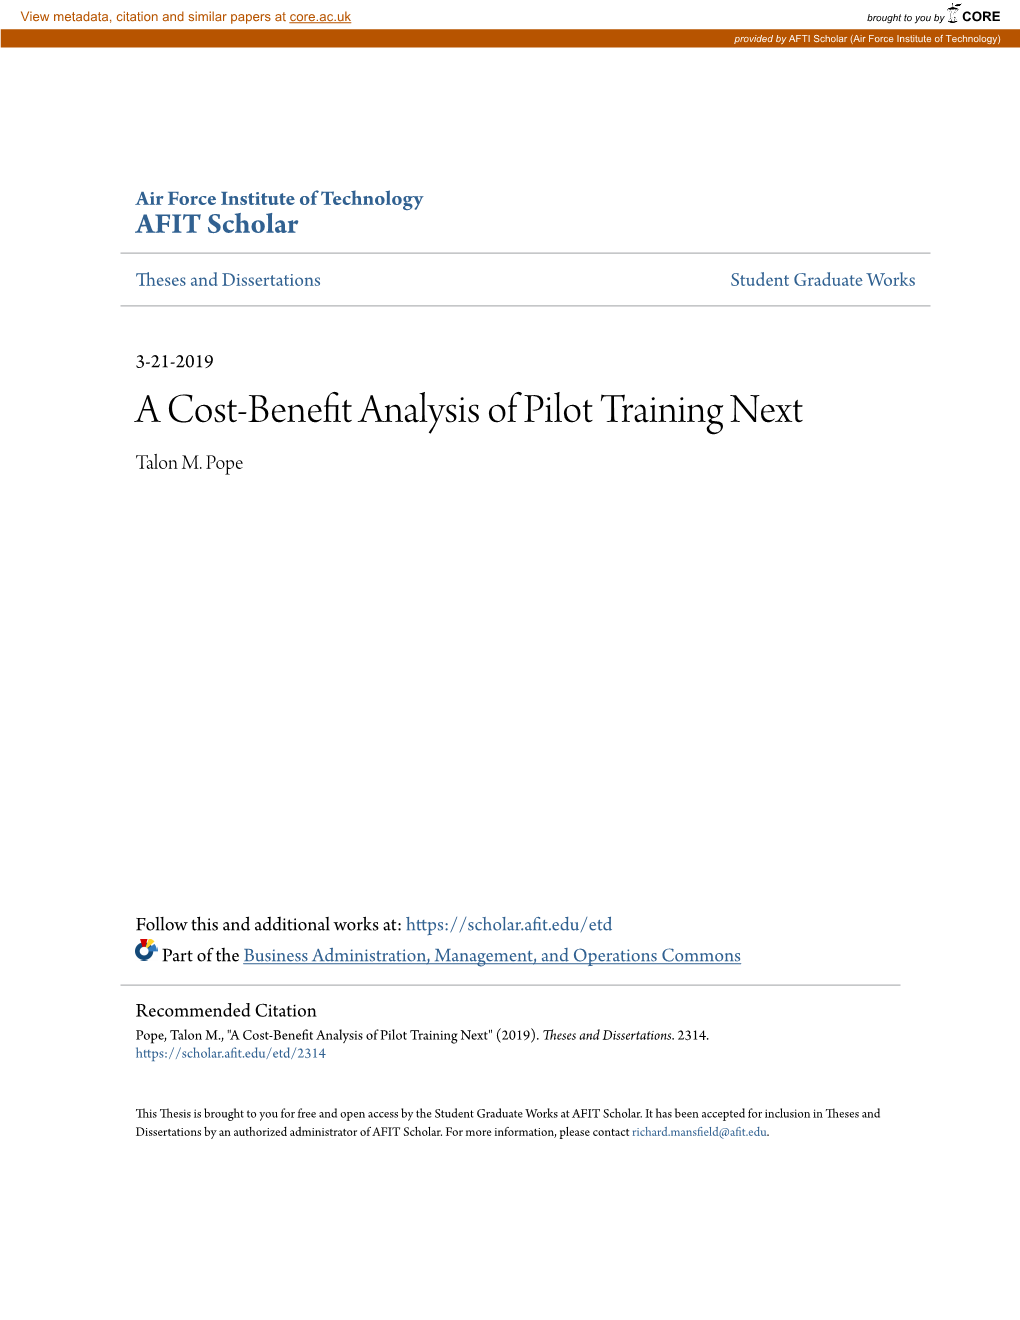 A Cost-Benefit Analysis of Pilot Training Next Talon M